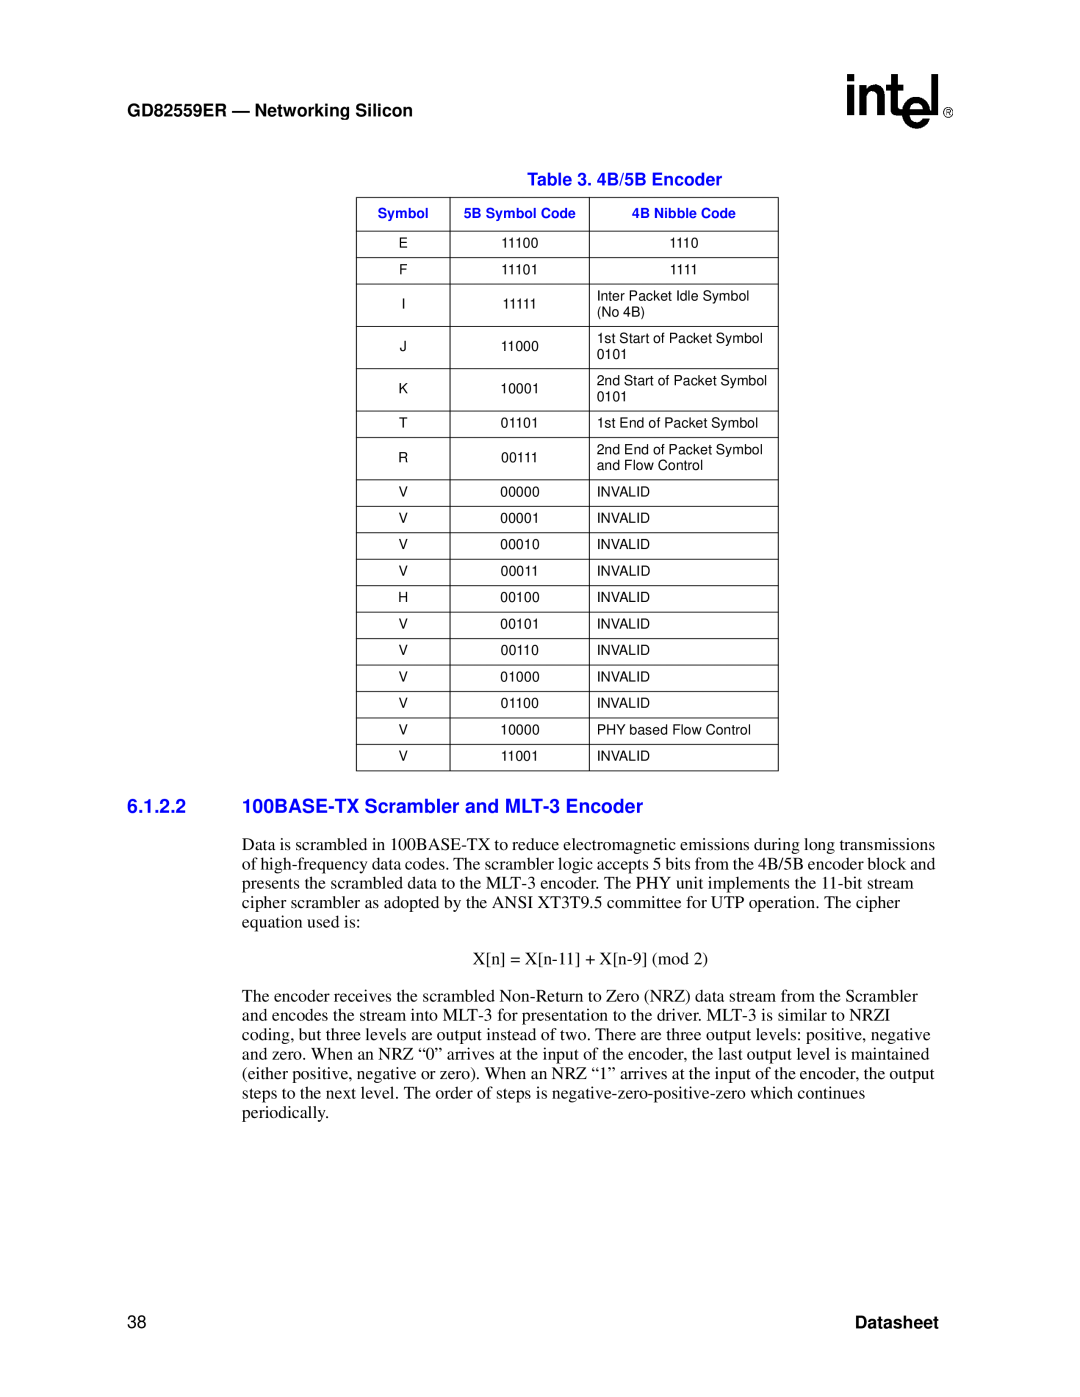 Intel manual 6.1.2.2 100BASE-TX Scrambler and MLT-3 Encoder, GD82559ER - Networkin g Silicon, 4B/5B Encoder, Datasheet 